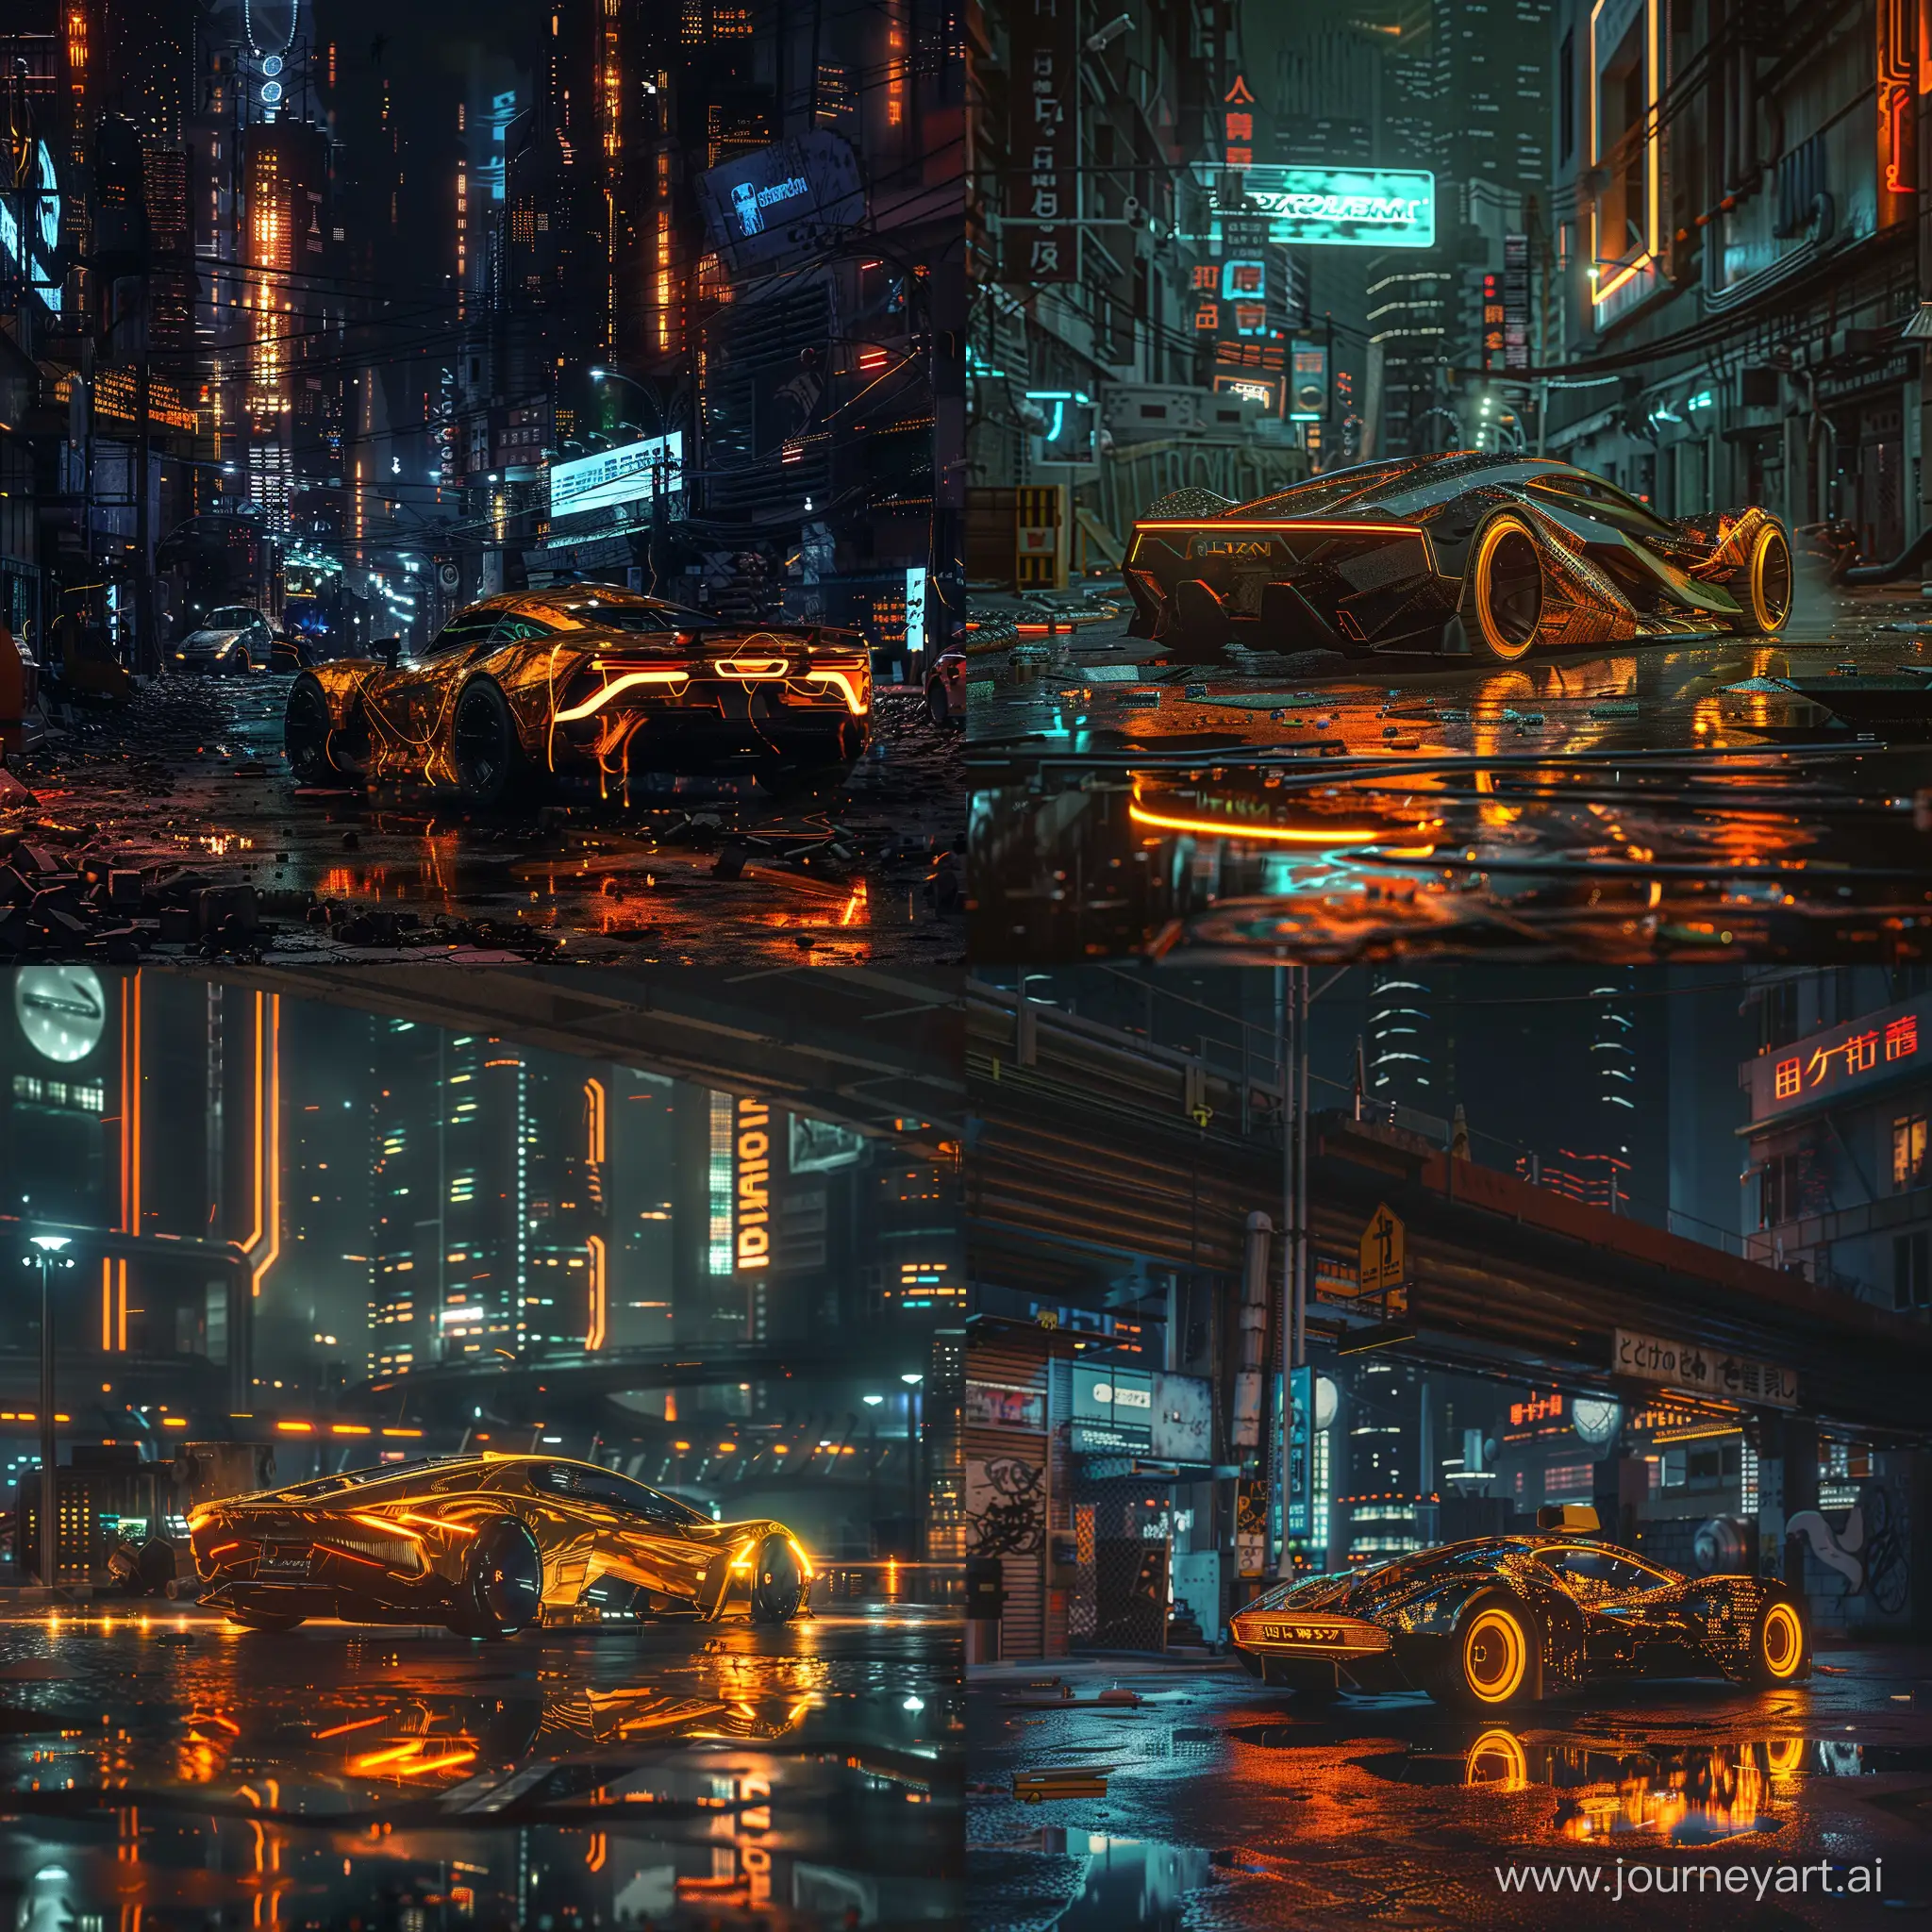 Desolate-Yet-Vibrant-Futuristic-Cityscape-Lone-Futuristic-Car-in-Nighttime-Cyberpunk-Scene